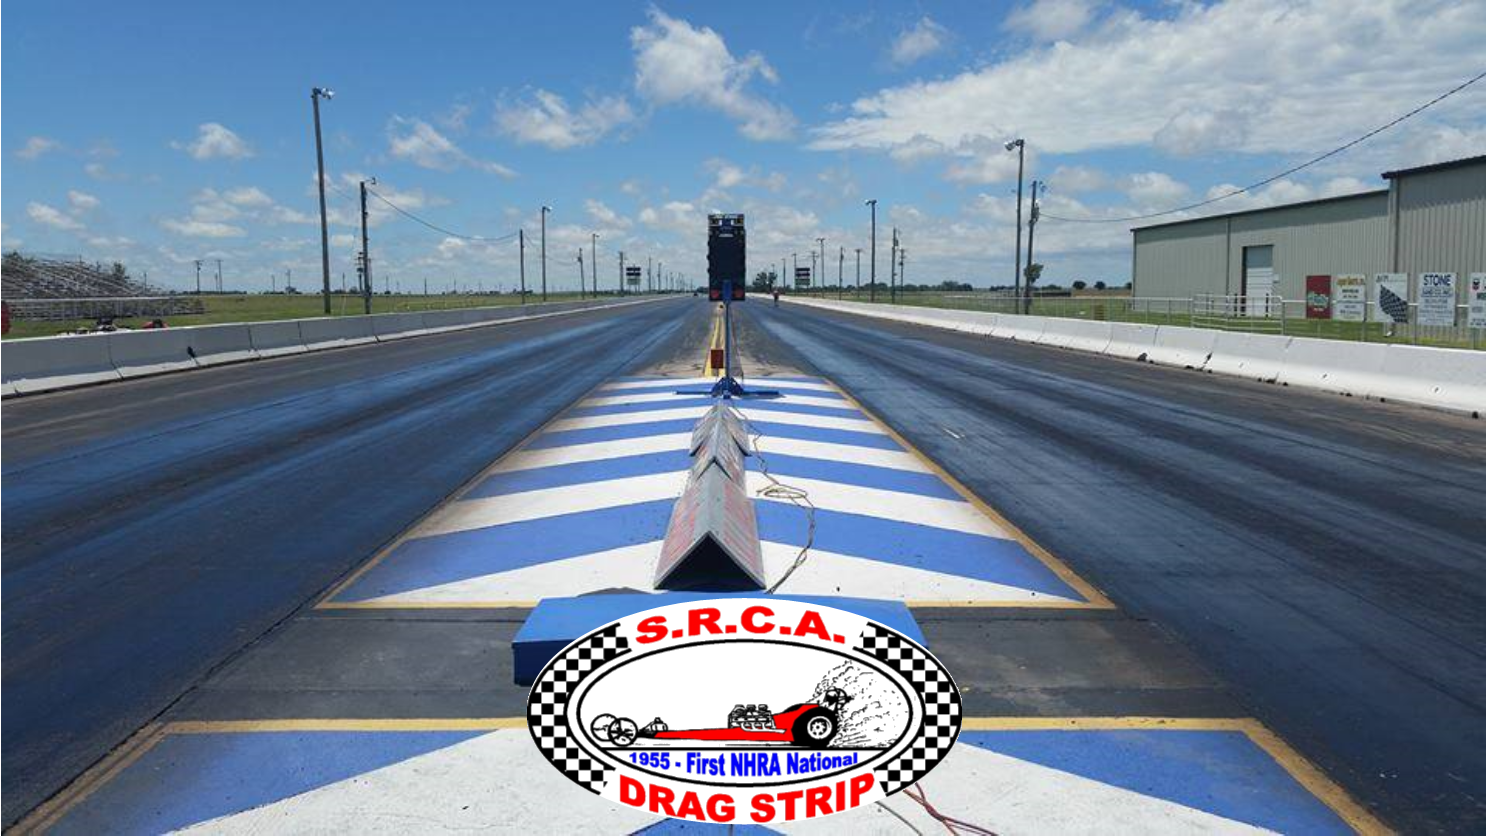 S.R.C.A. Drag Strip - Great Bend KS, 67530